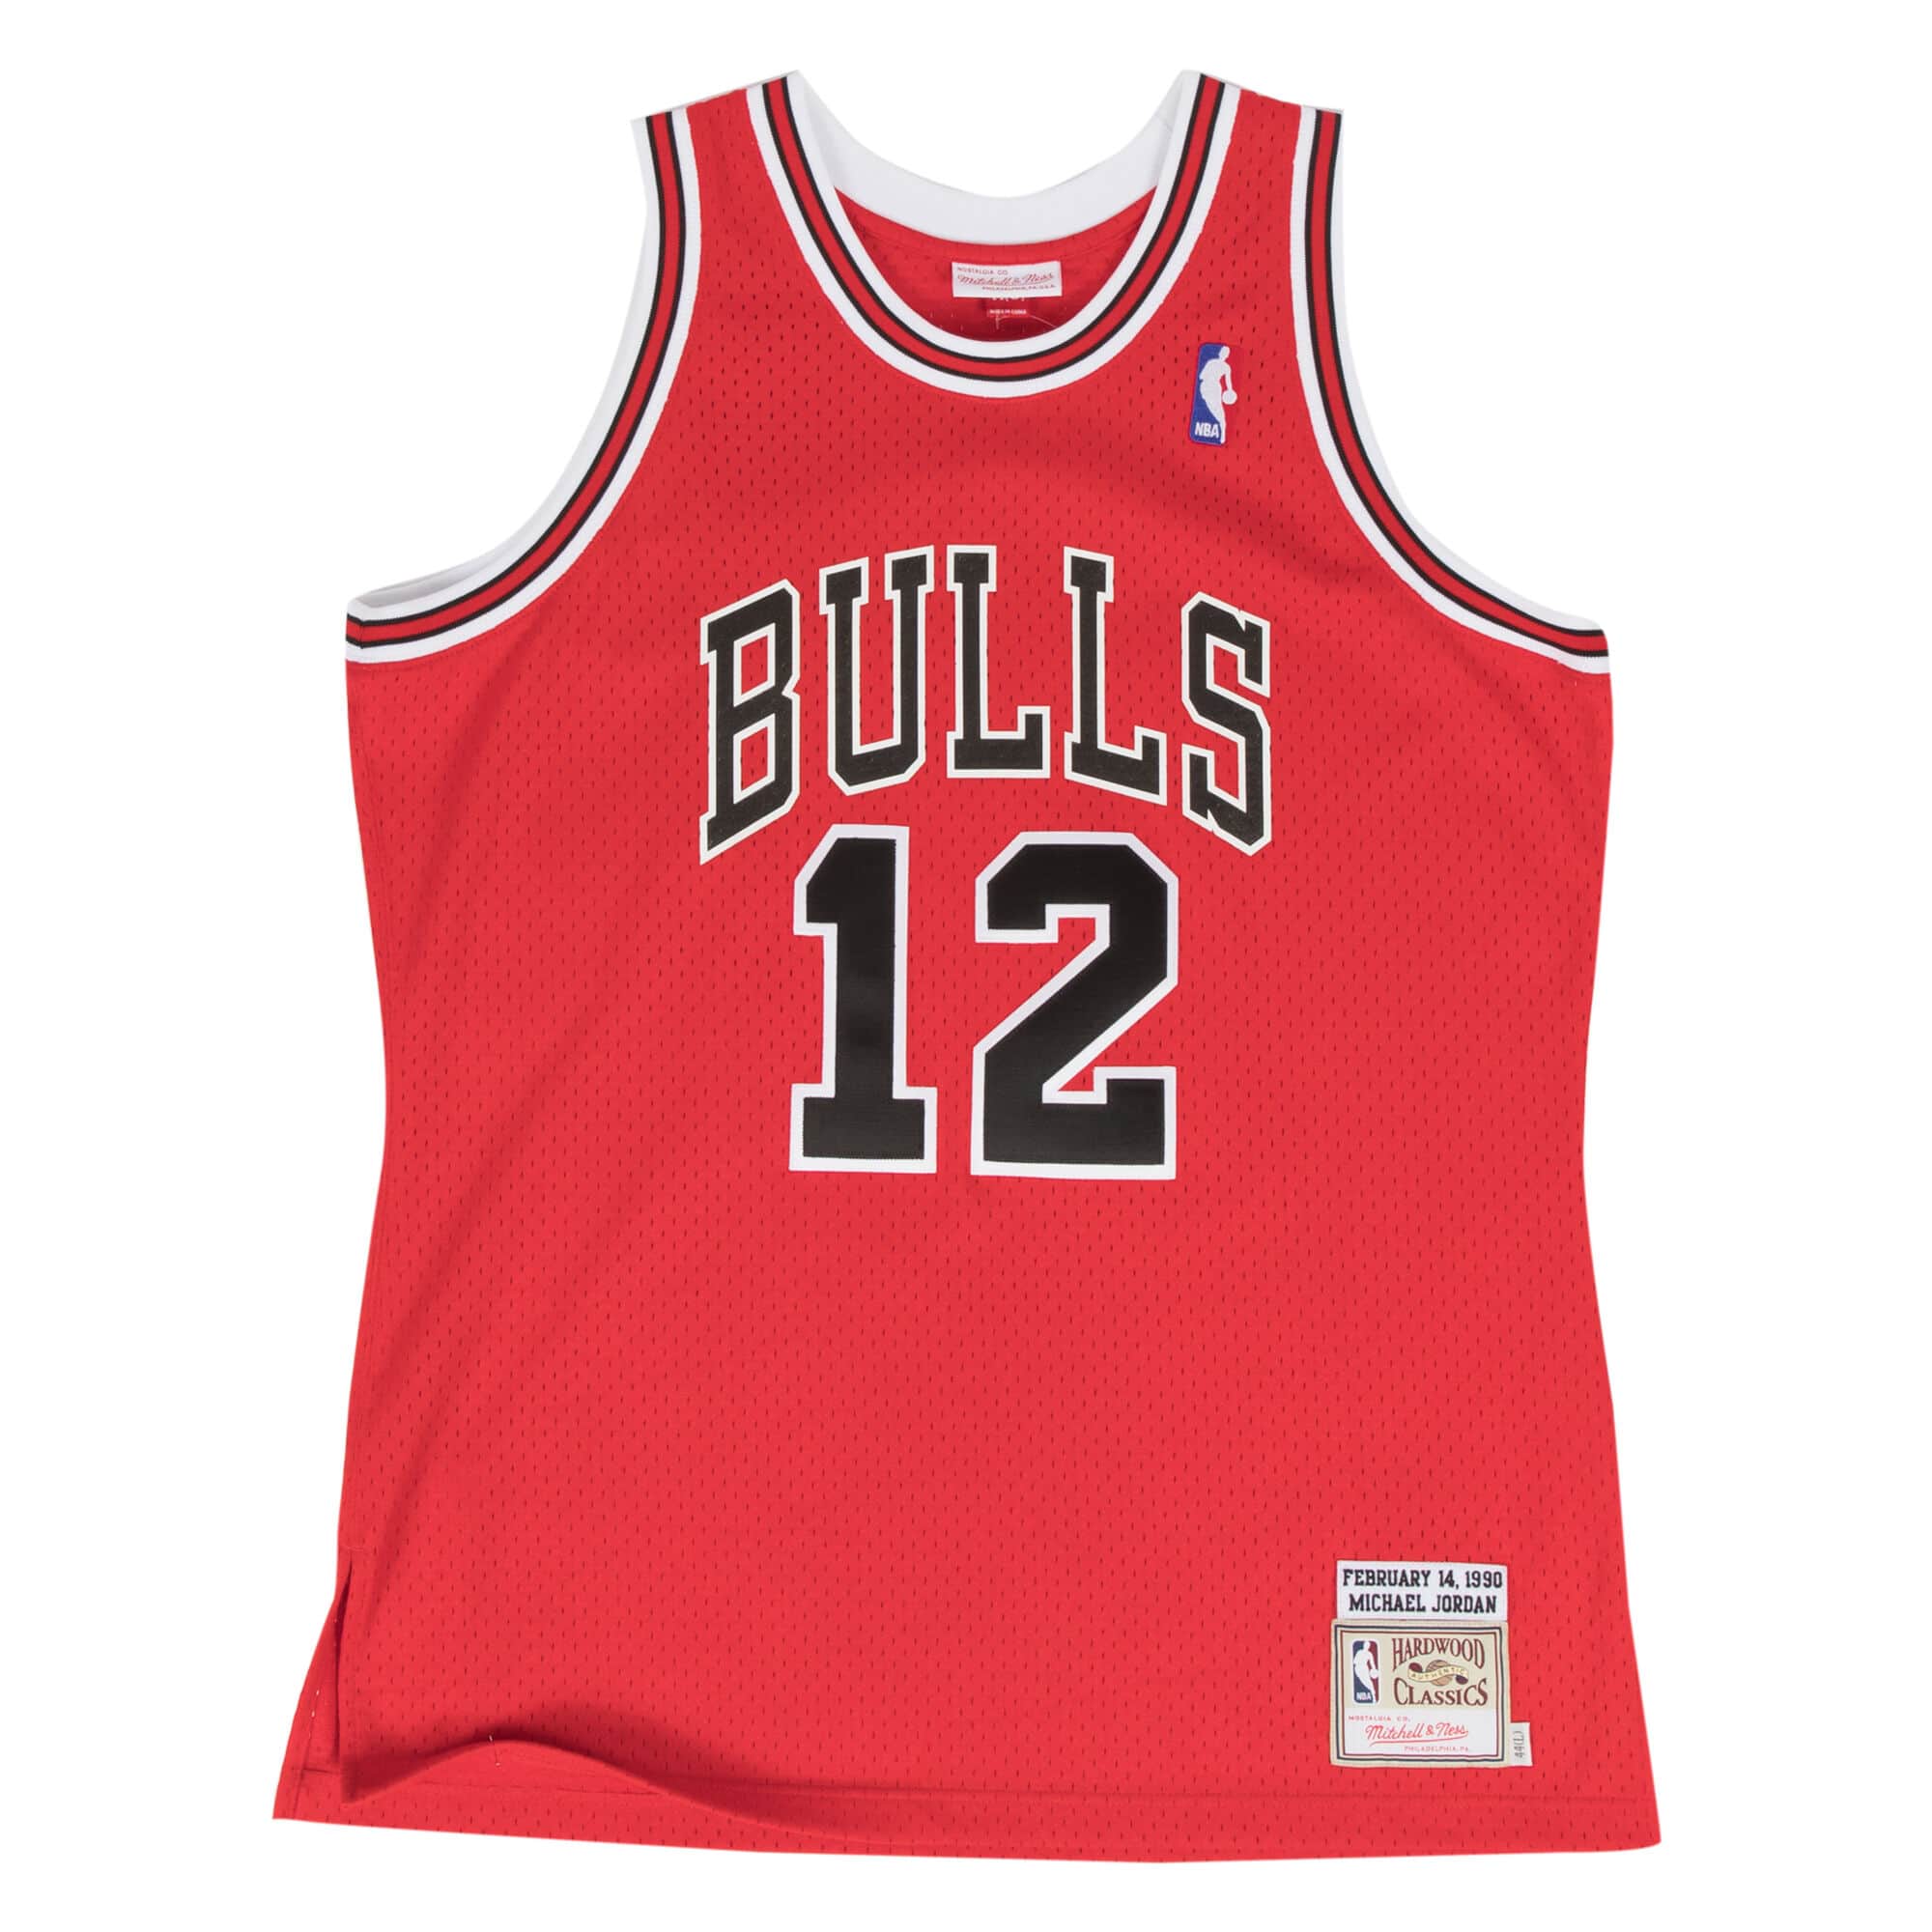 Michael Jordan Chicago Bulls 1989-1990 Authentic Jersey